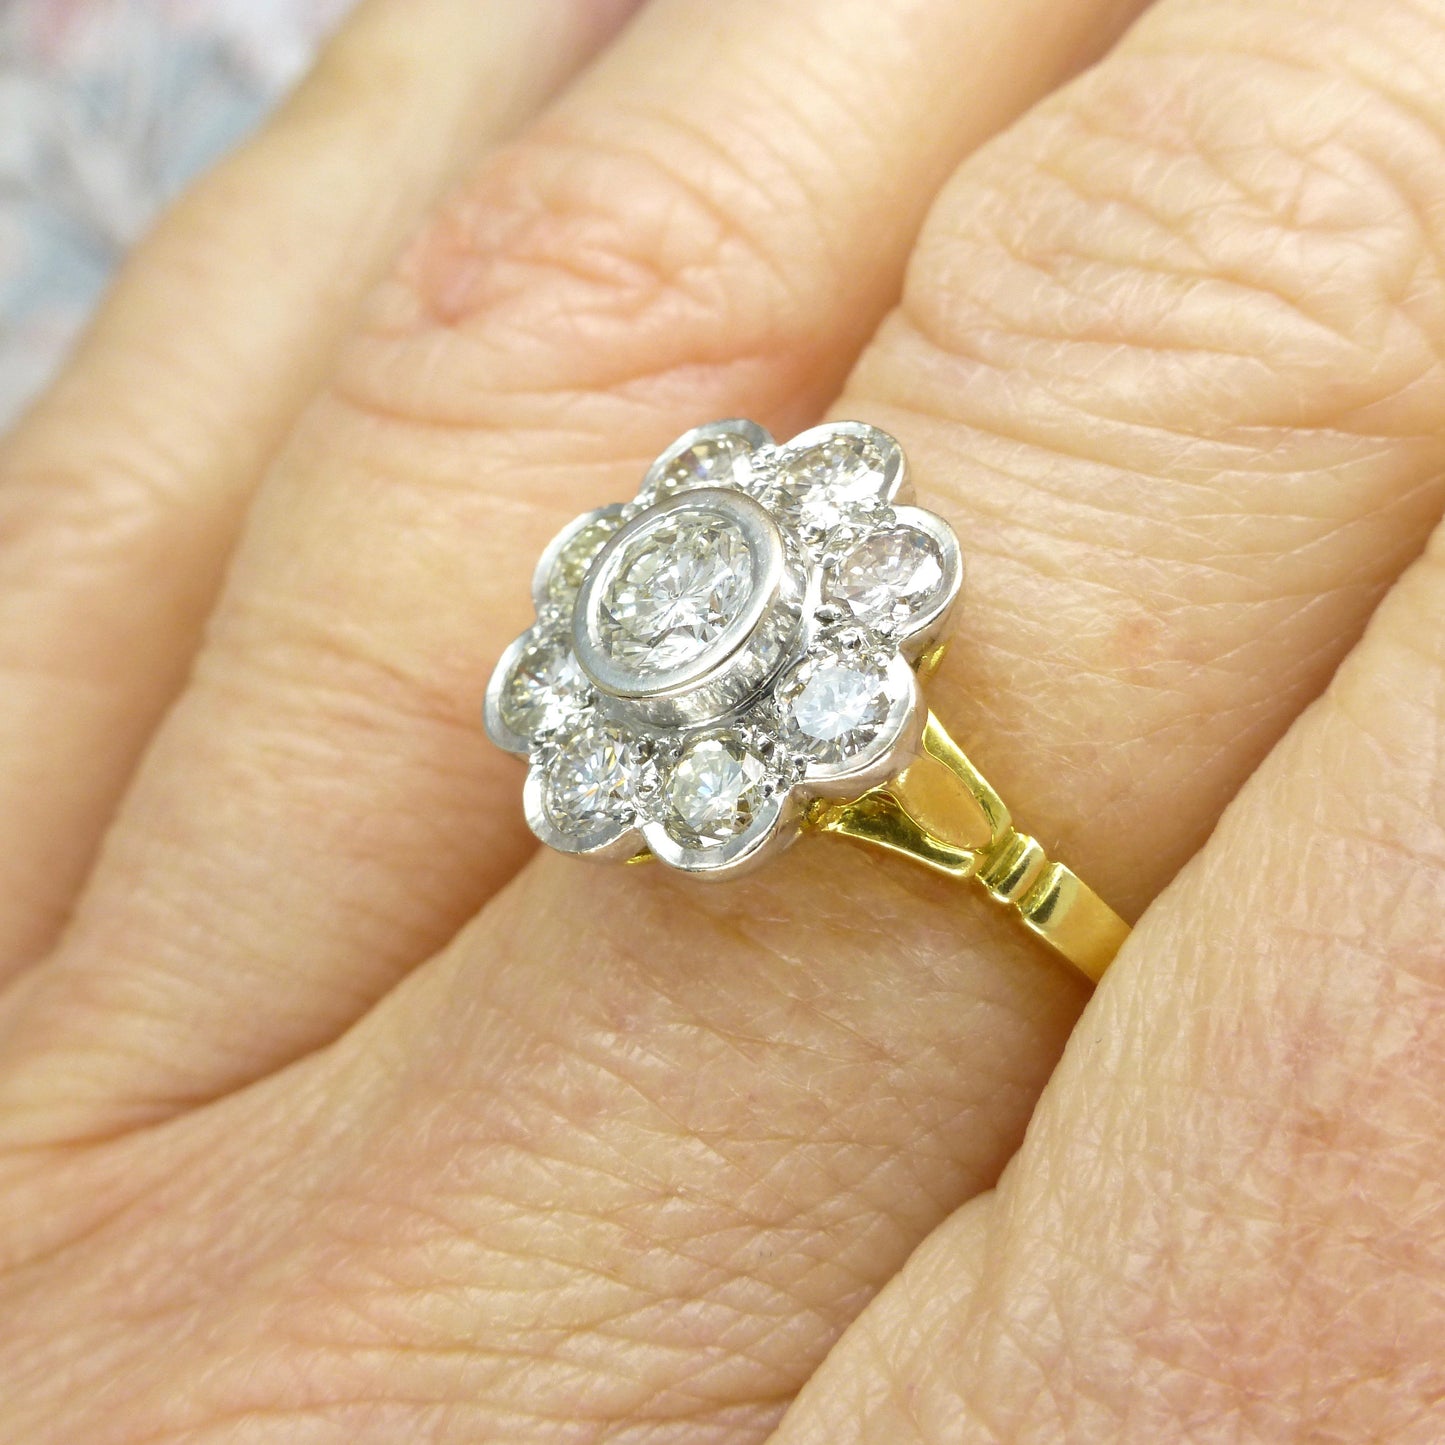 Vintage 18ct gold diamond cluster engagement ring 1.23 carat ~ Independent Valuation